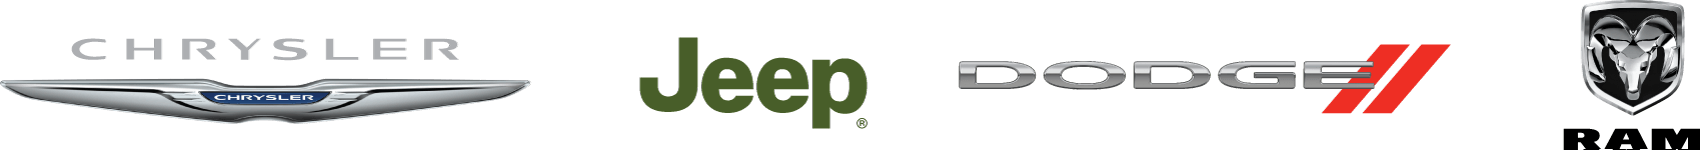 Chrysler Dodge Jeep Ram Logo - Service Center | Reedman Toll Auto Group